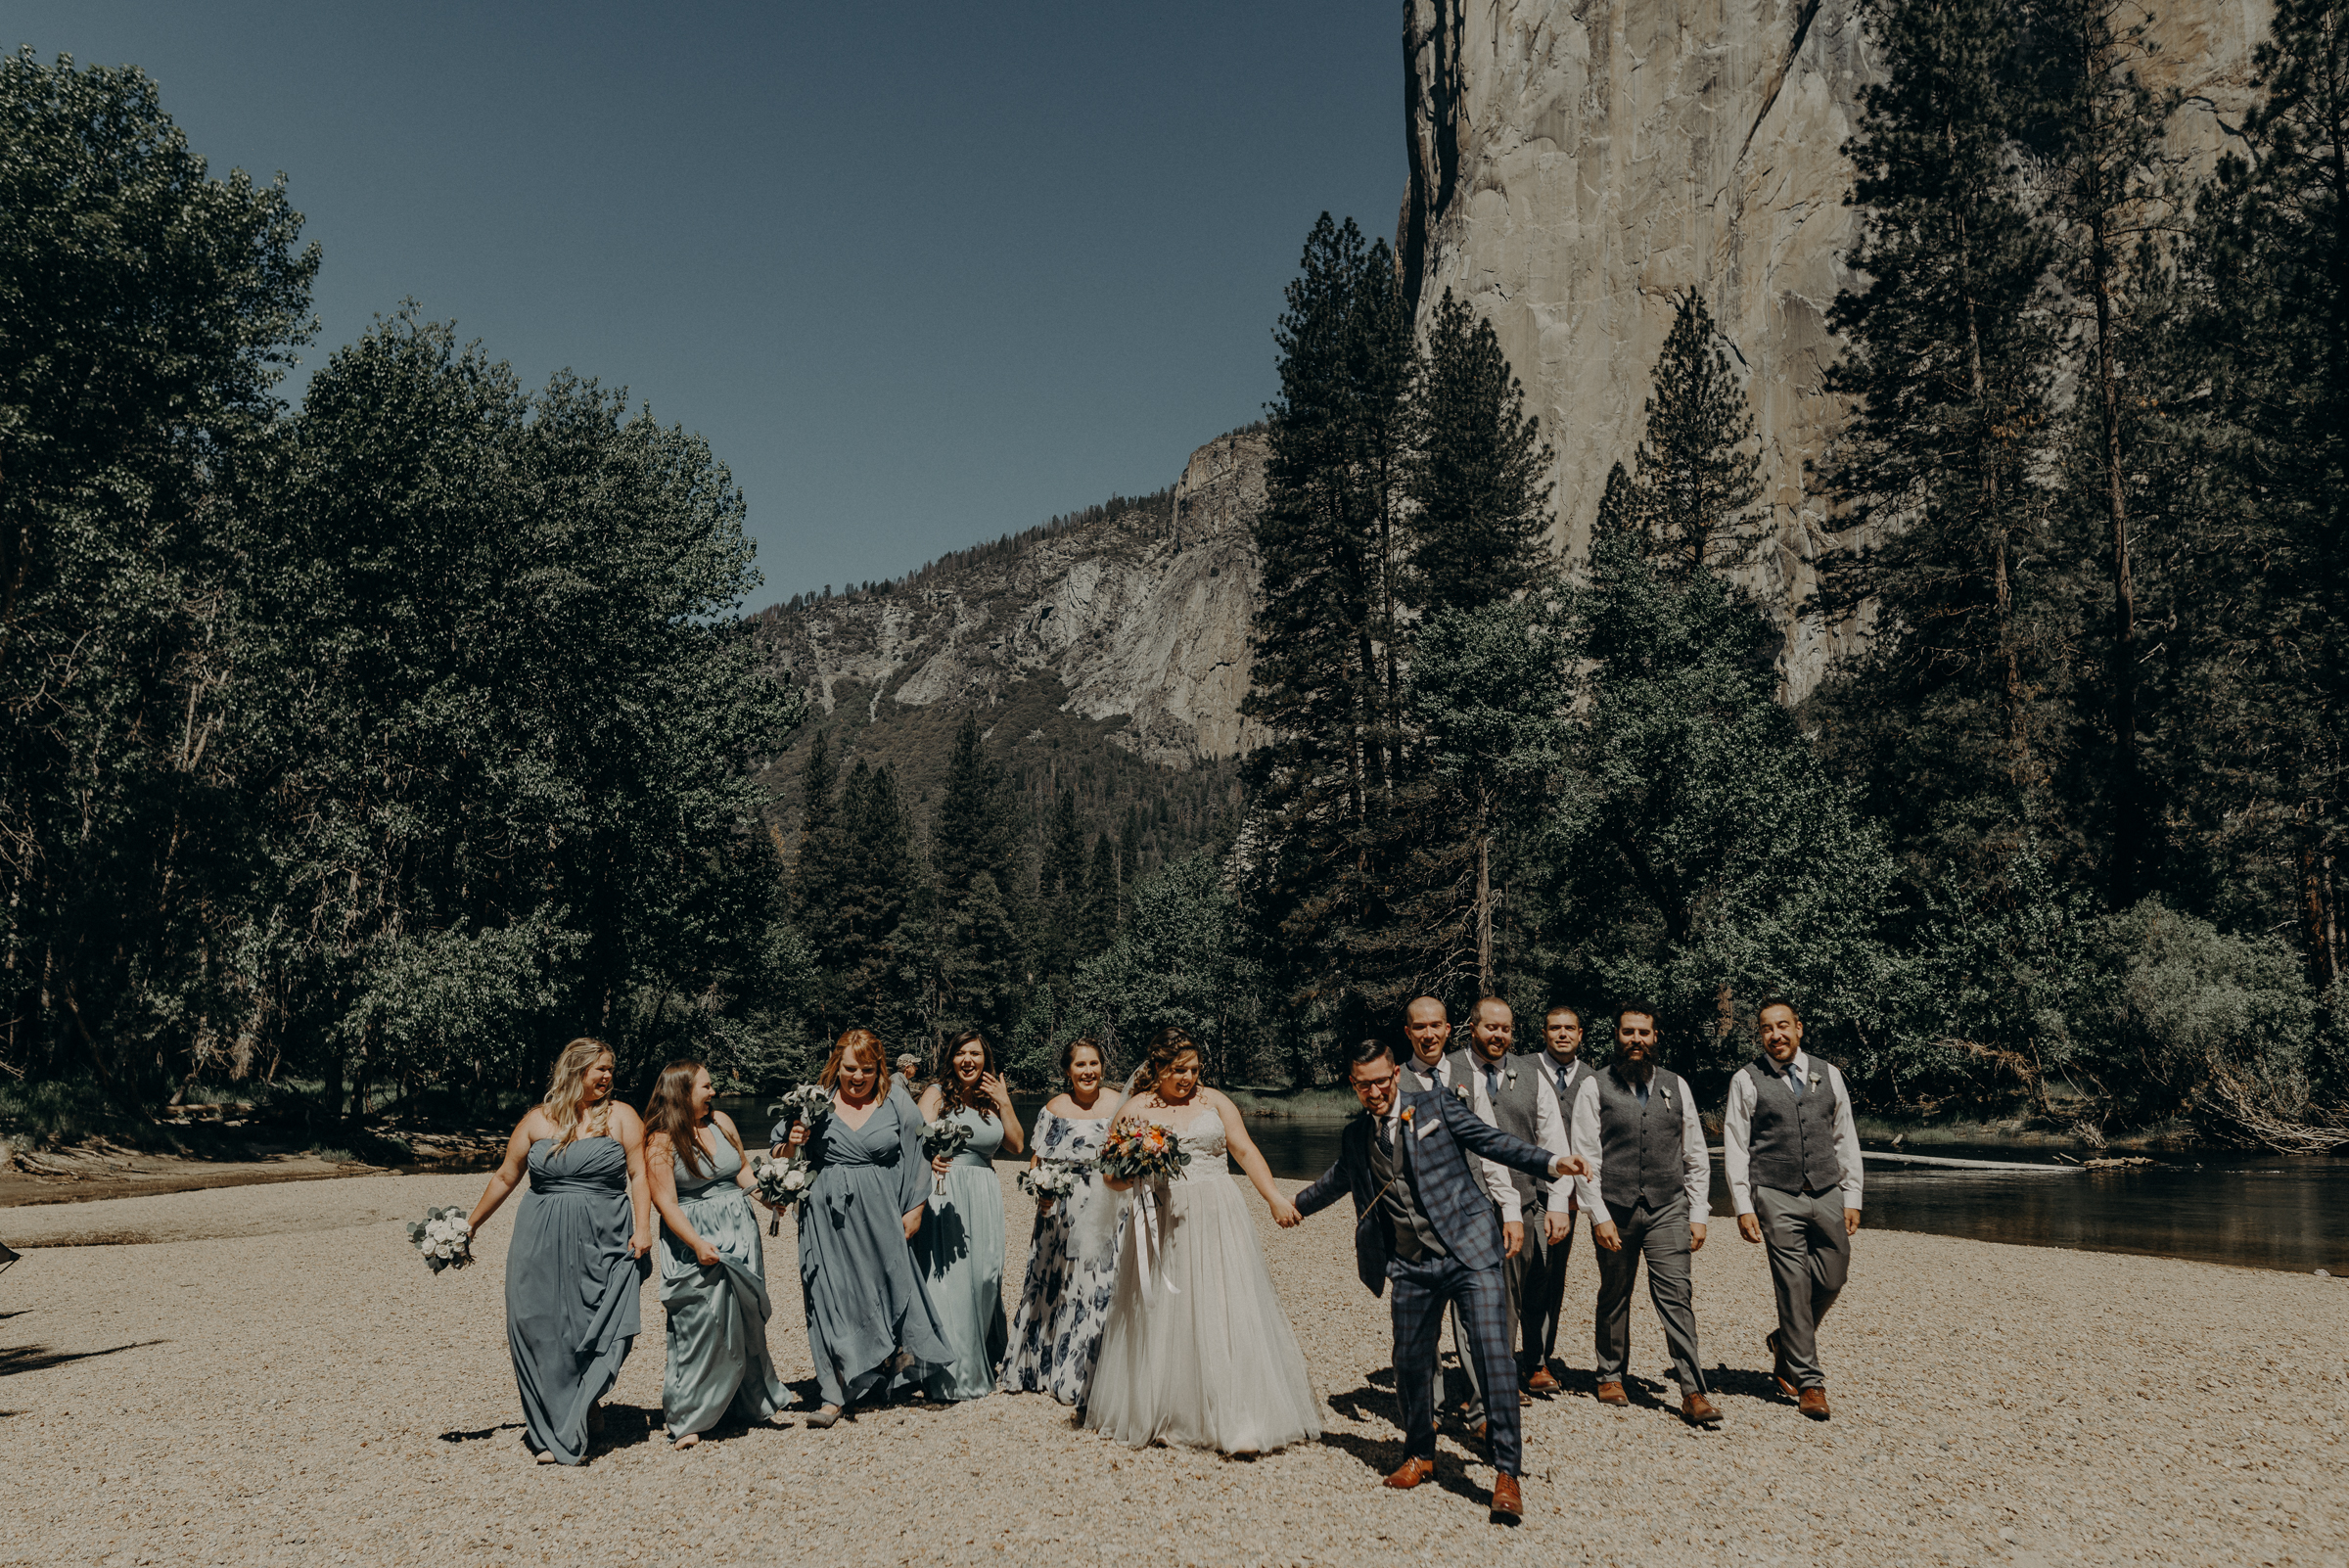 Los Angeles Wedding Photographers - Yosemite Destination Wedding Elopement - IsaiahAndTaylor.com -067.jpg